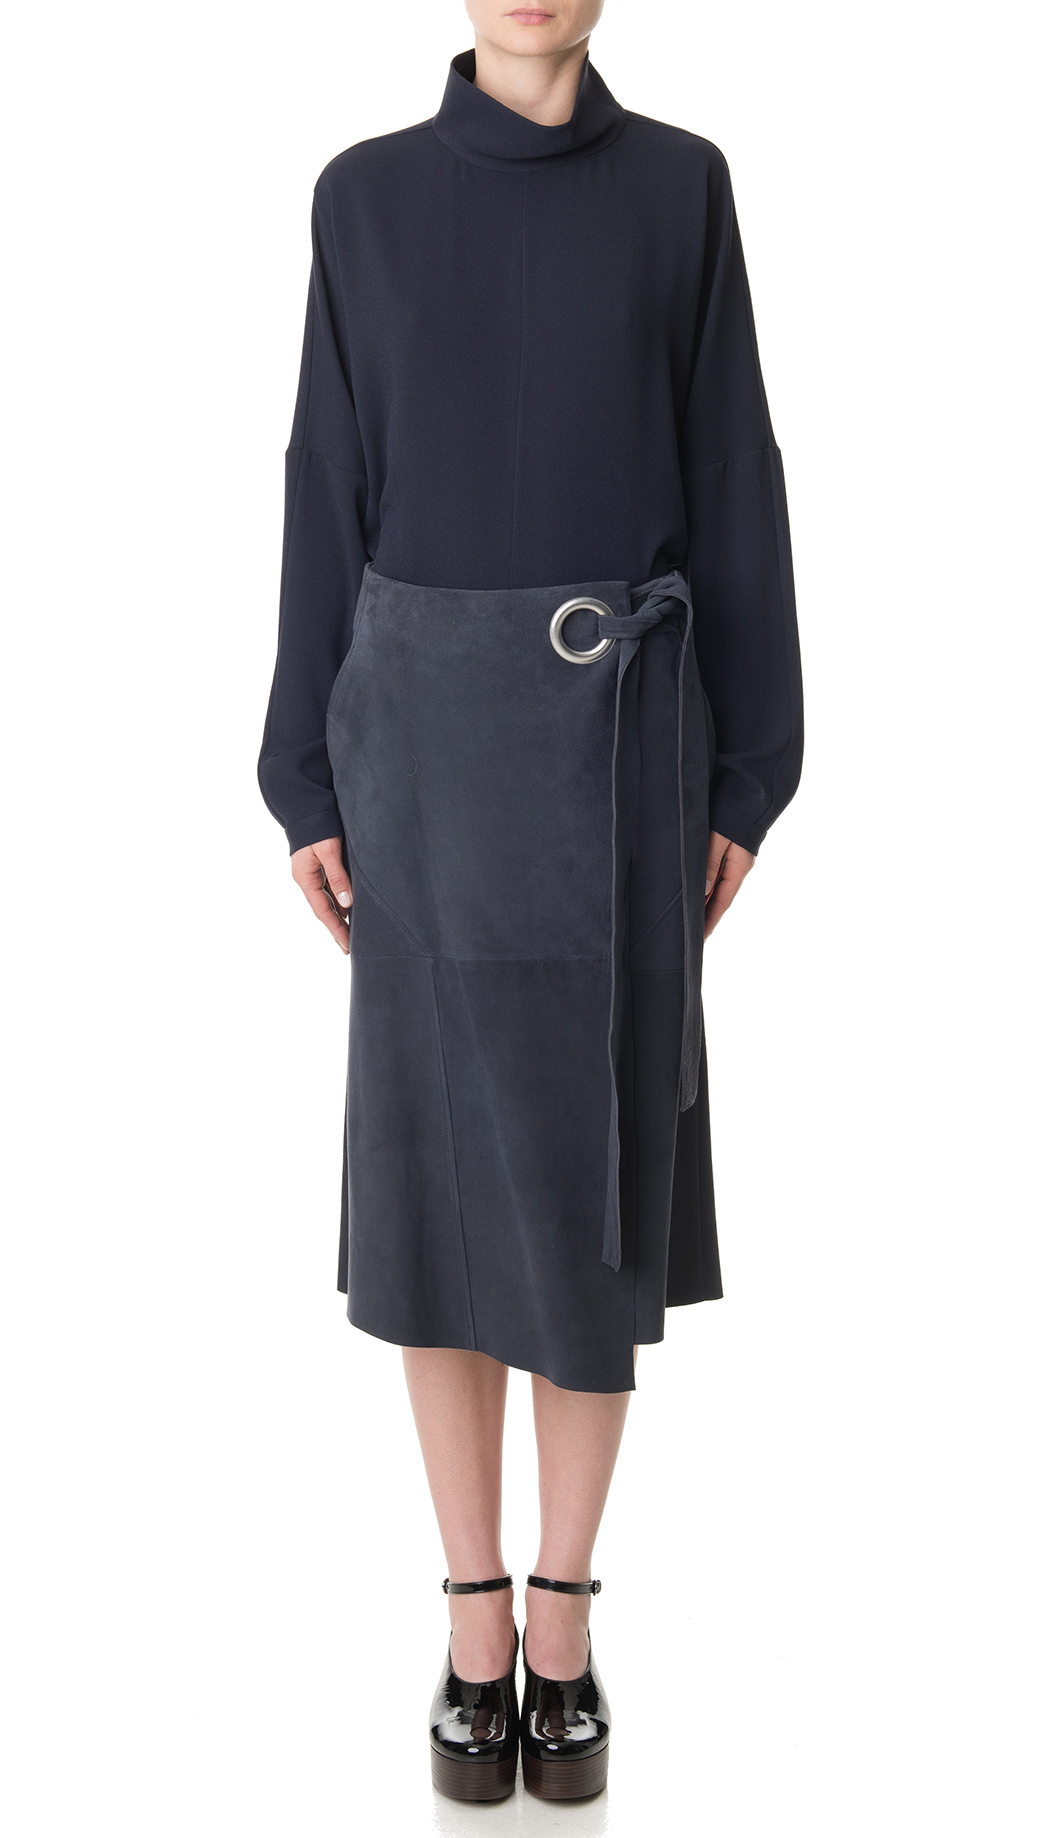 Tibi Suede Wrap Skirt in Denim (Blue) - Lyst